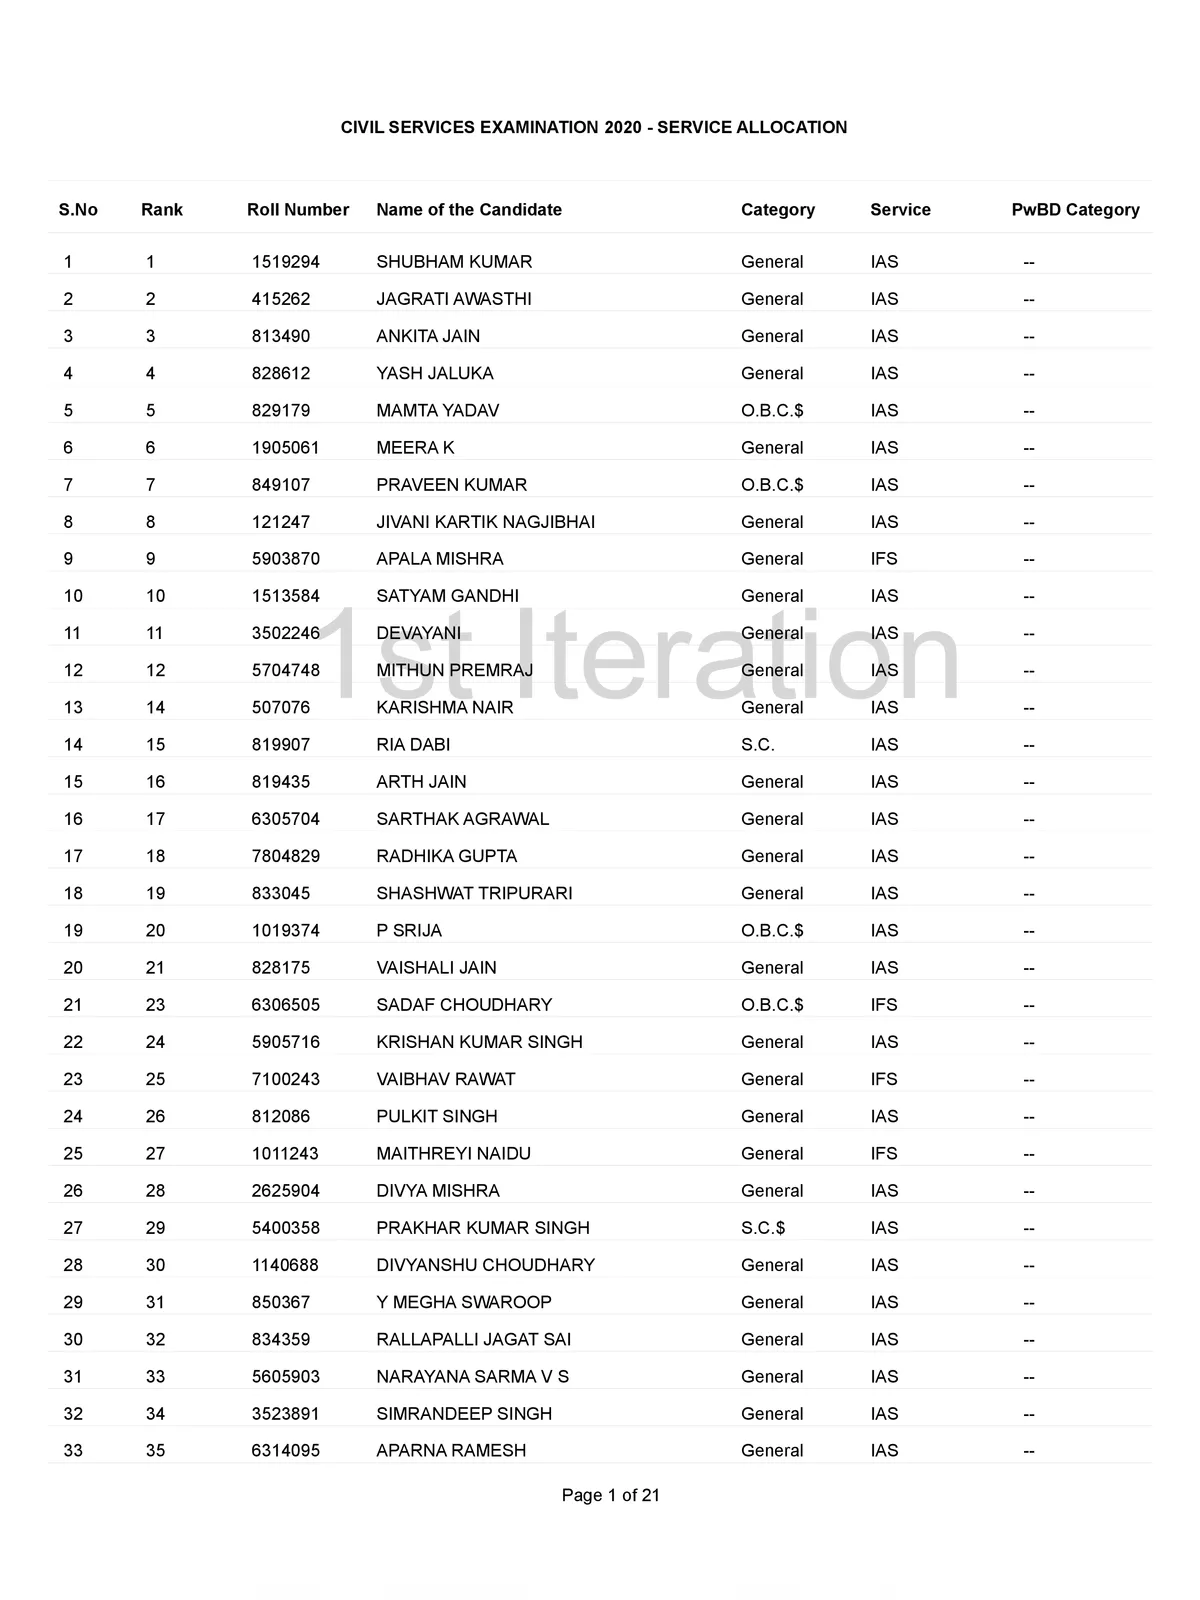 UPSC Service Allocation List 2020